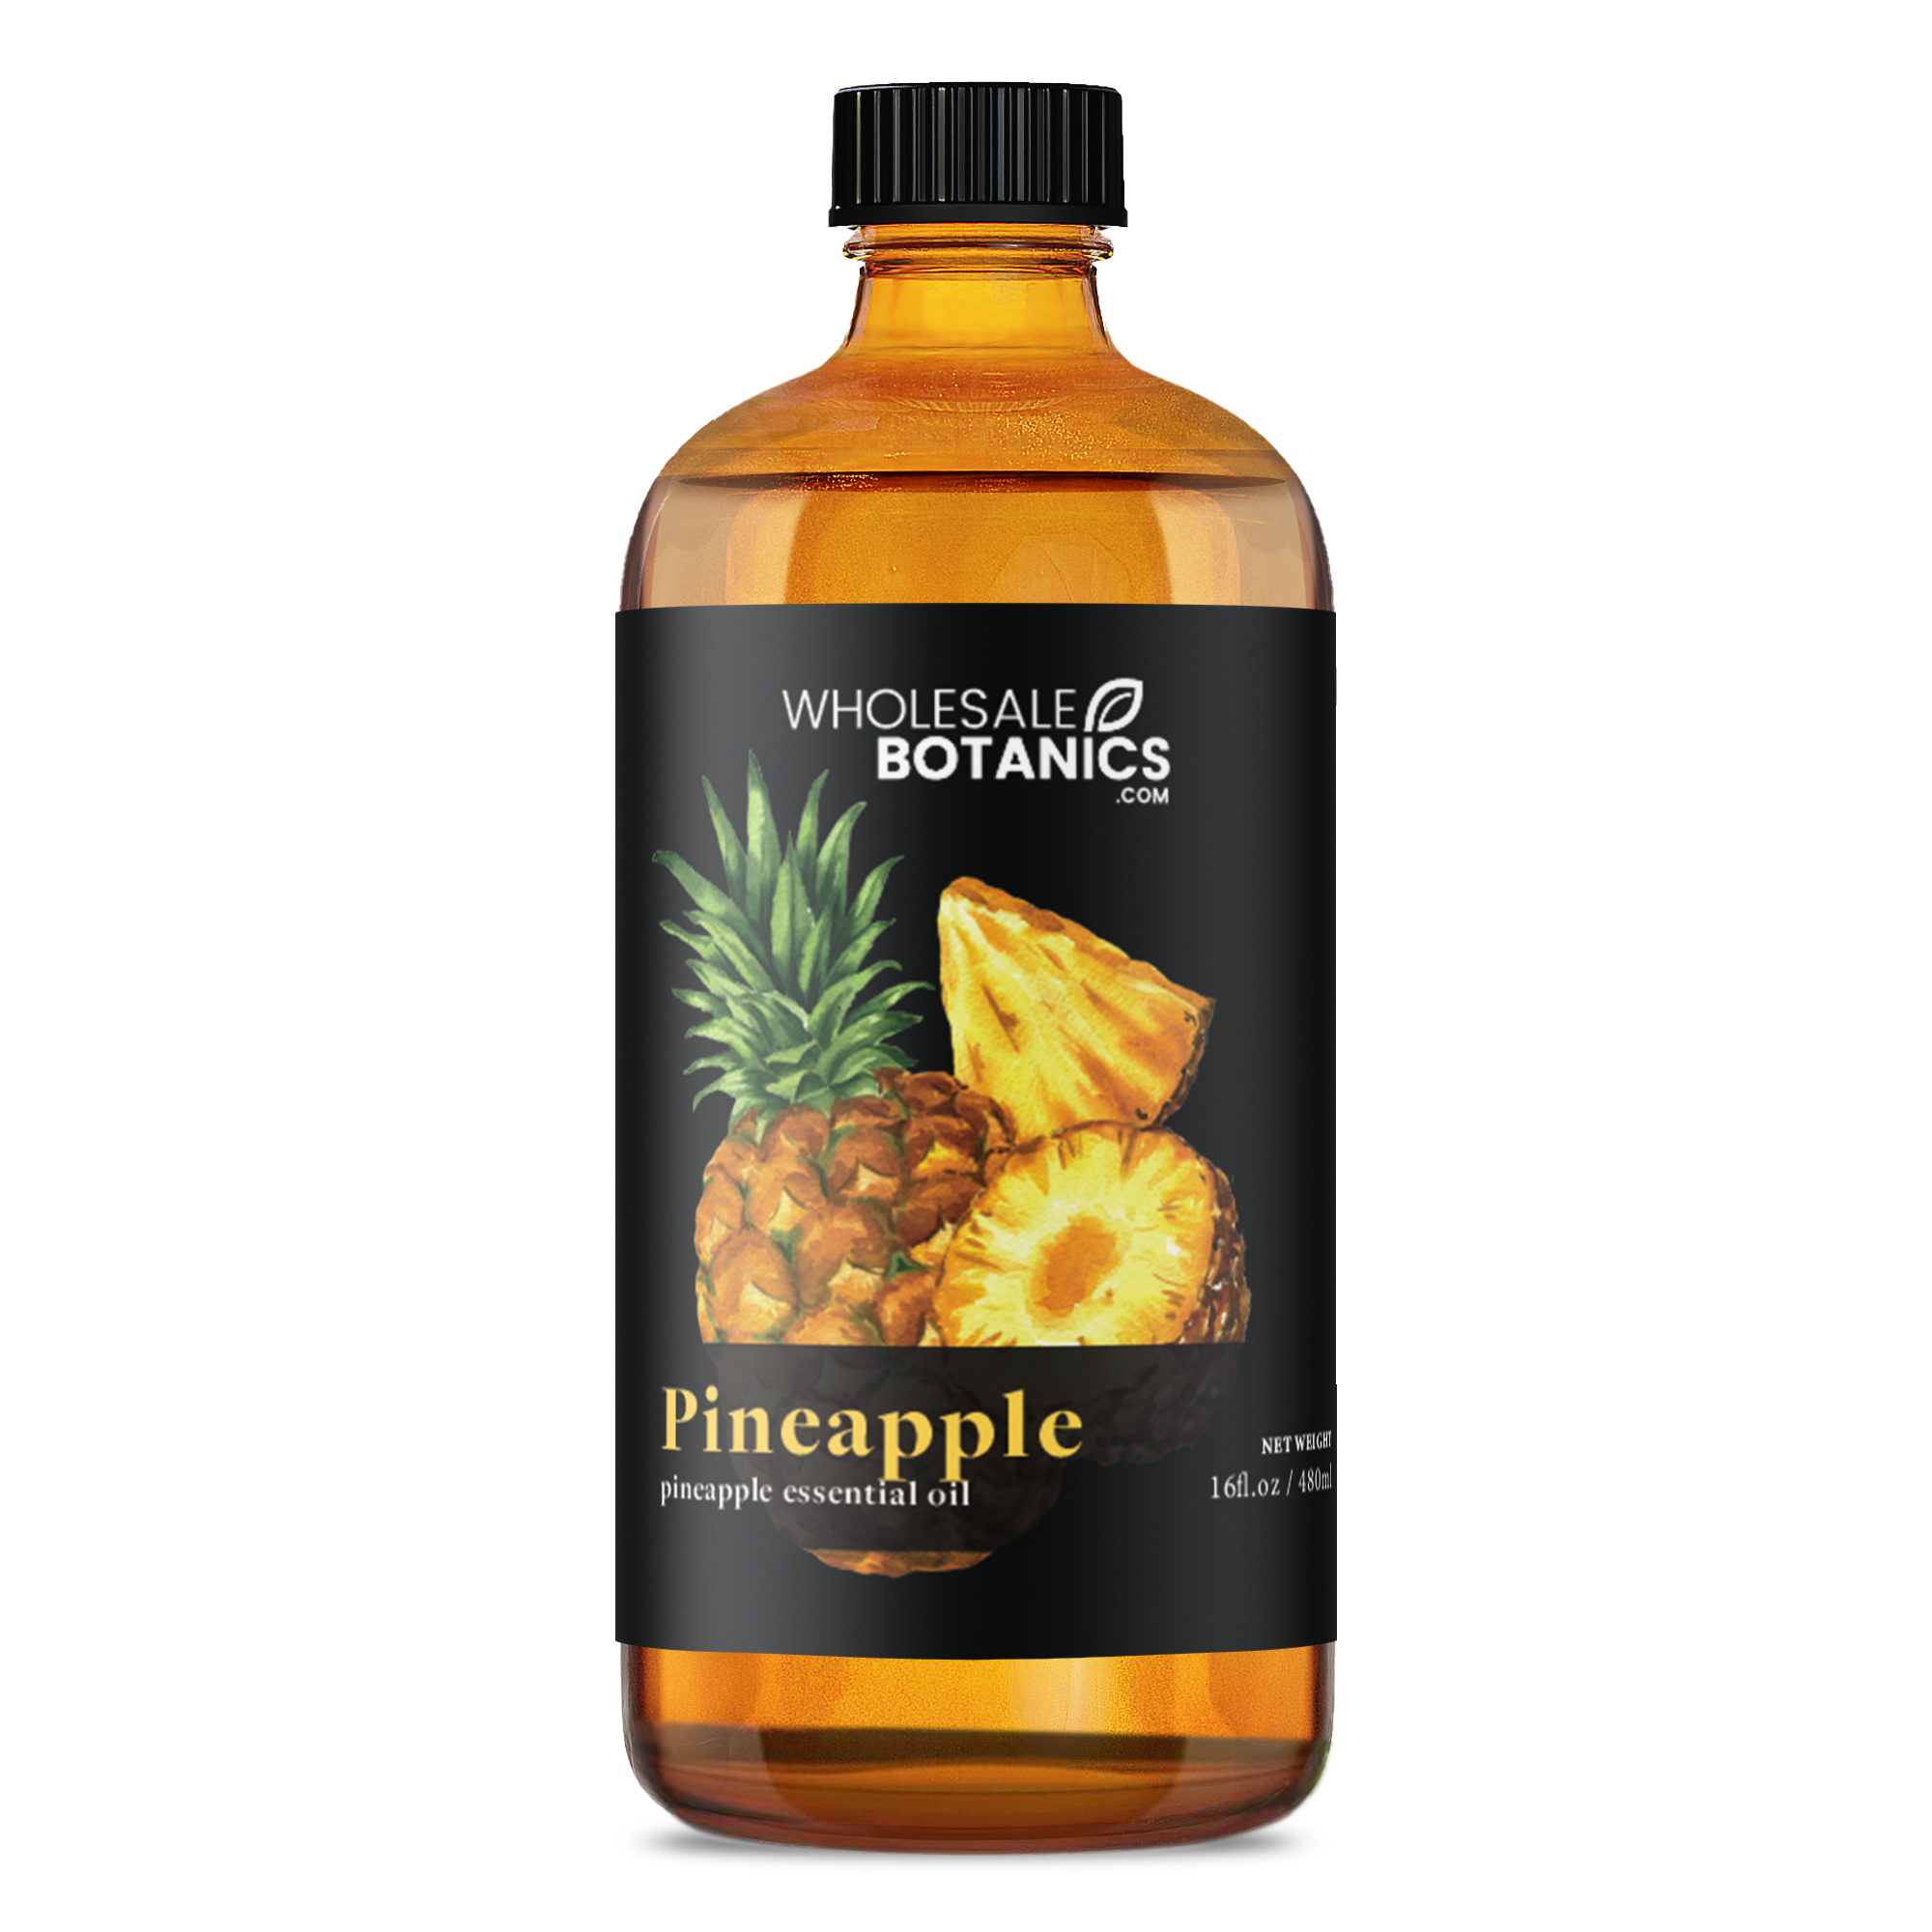 Pineapple Vanilla Essential Oil For Meditation, Relaxation, Yoga